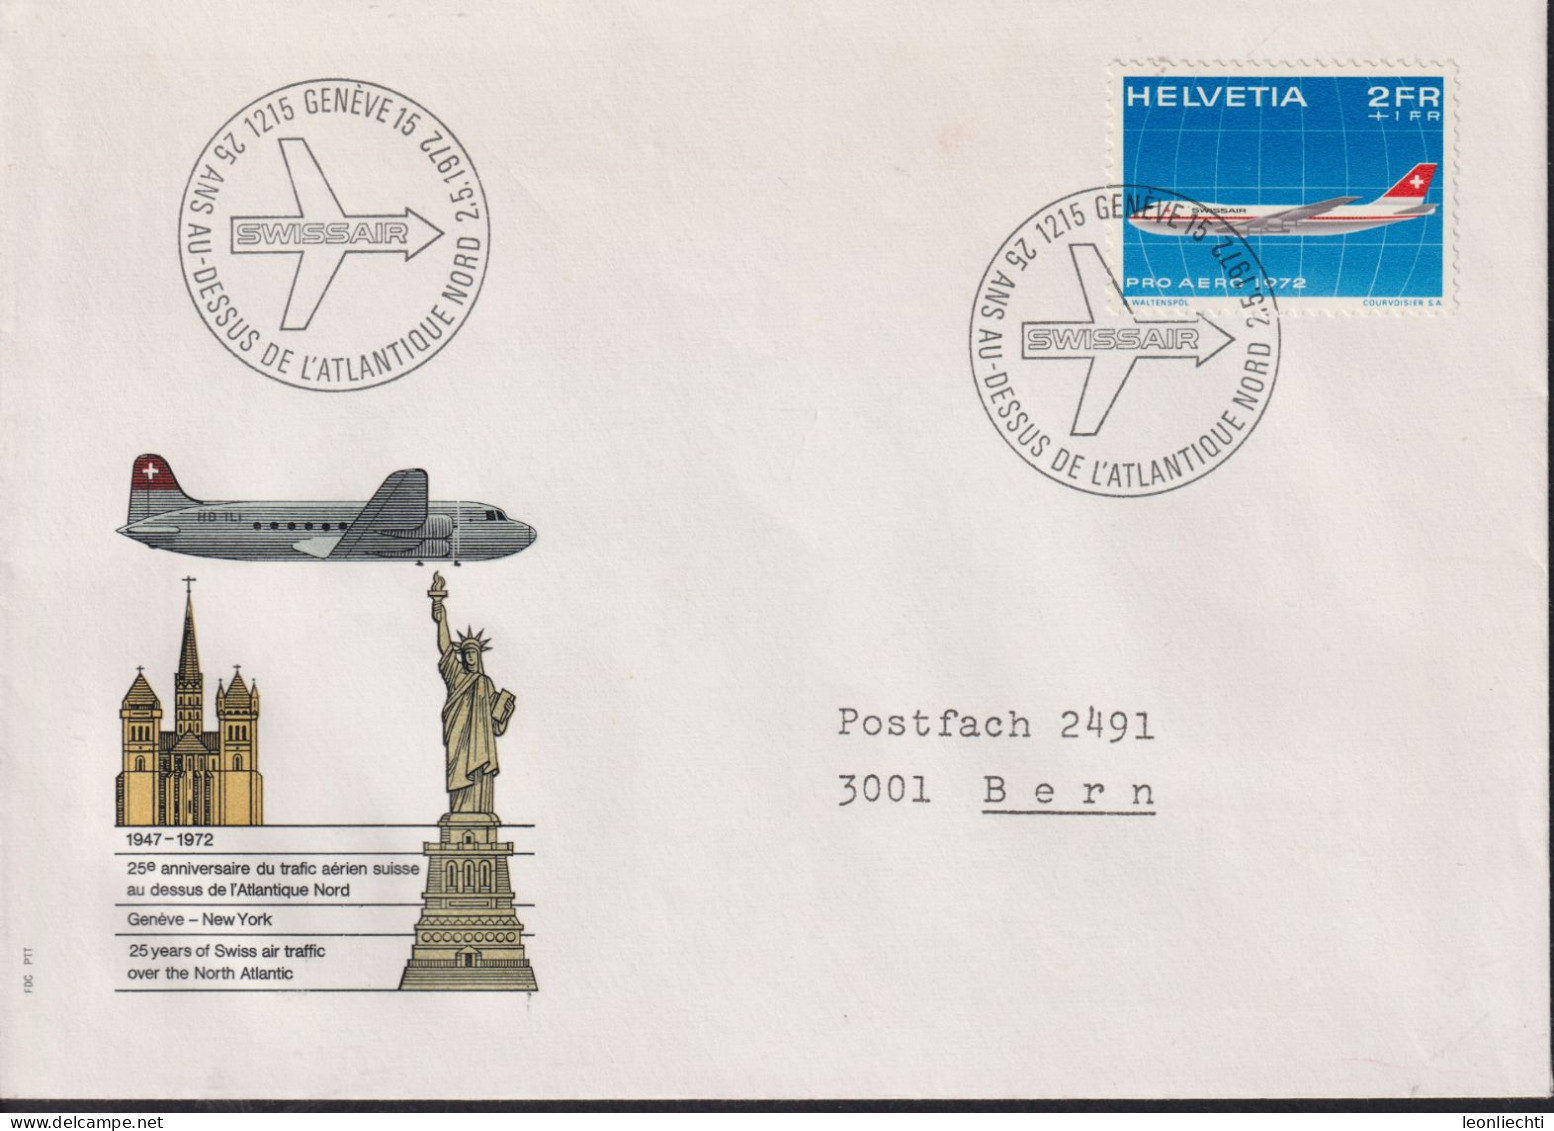 1972 Pro Aero, SWISSAIR, Zum: F47, Mi: 968, ⵙ1215 GENÈVE 15, 25 ANS - DESSUS DE L`ATLANTIQUE NORD - First Flight Covers